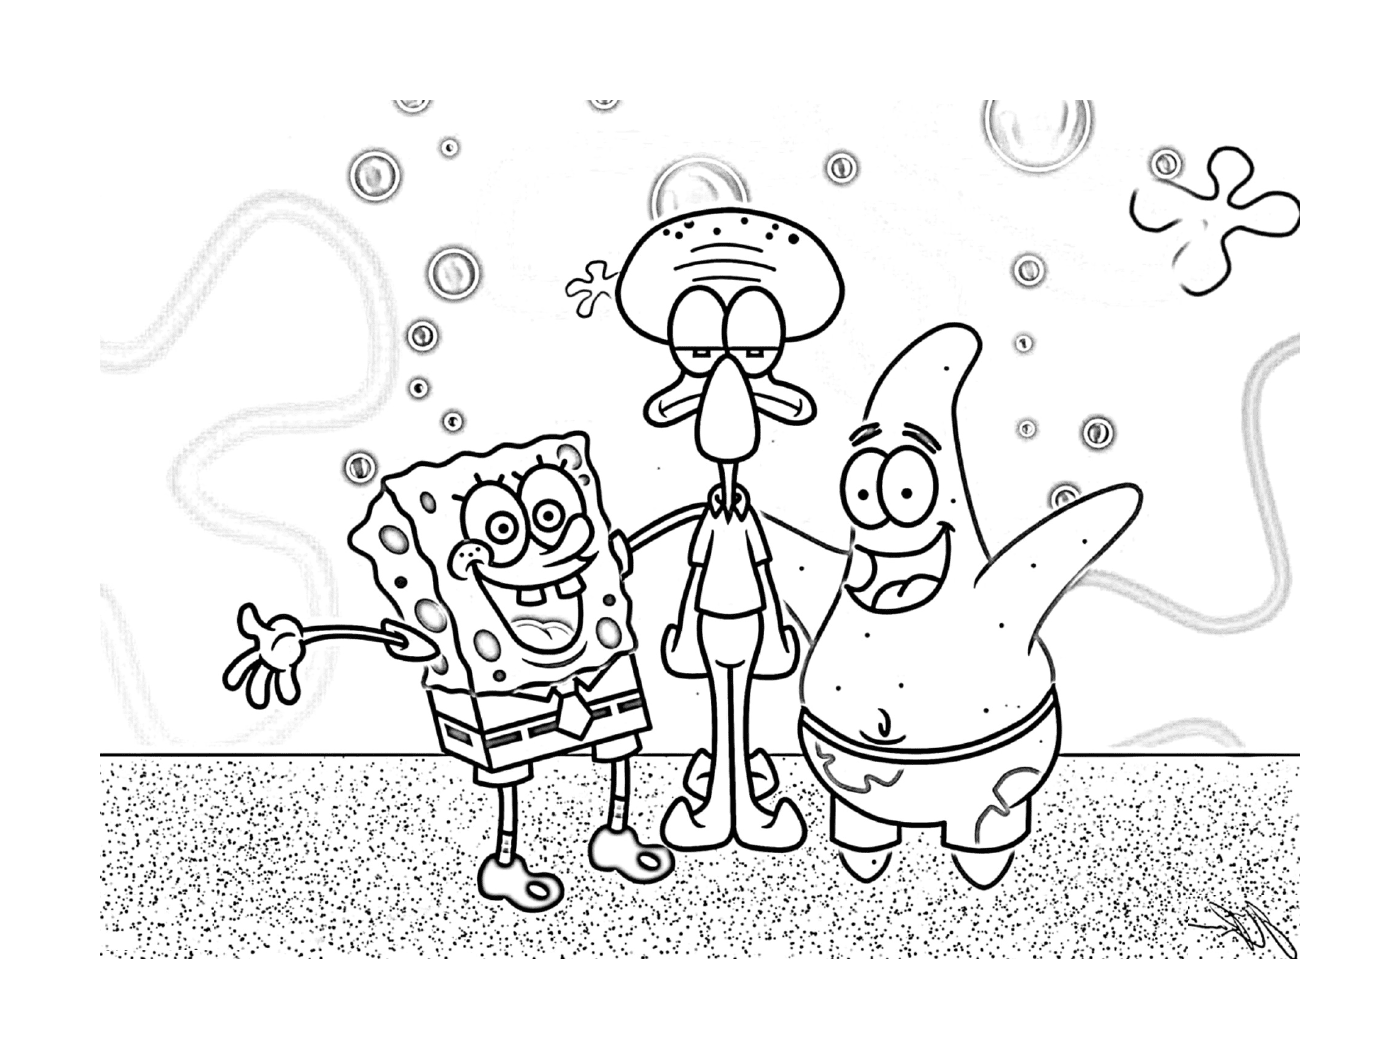  Spongebob and Patrick, a happy family 